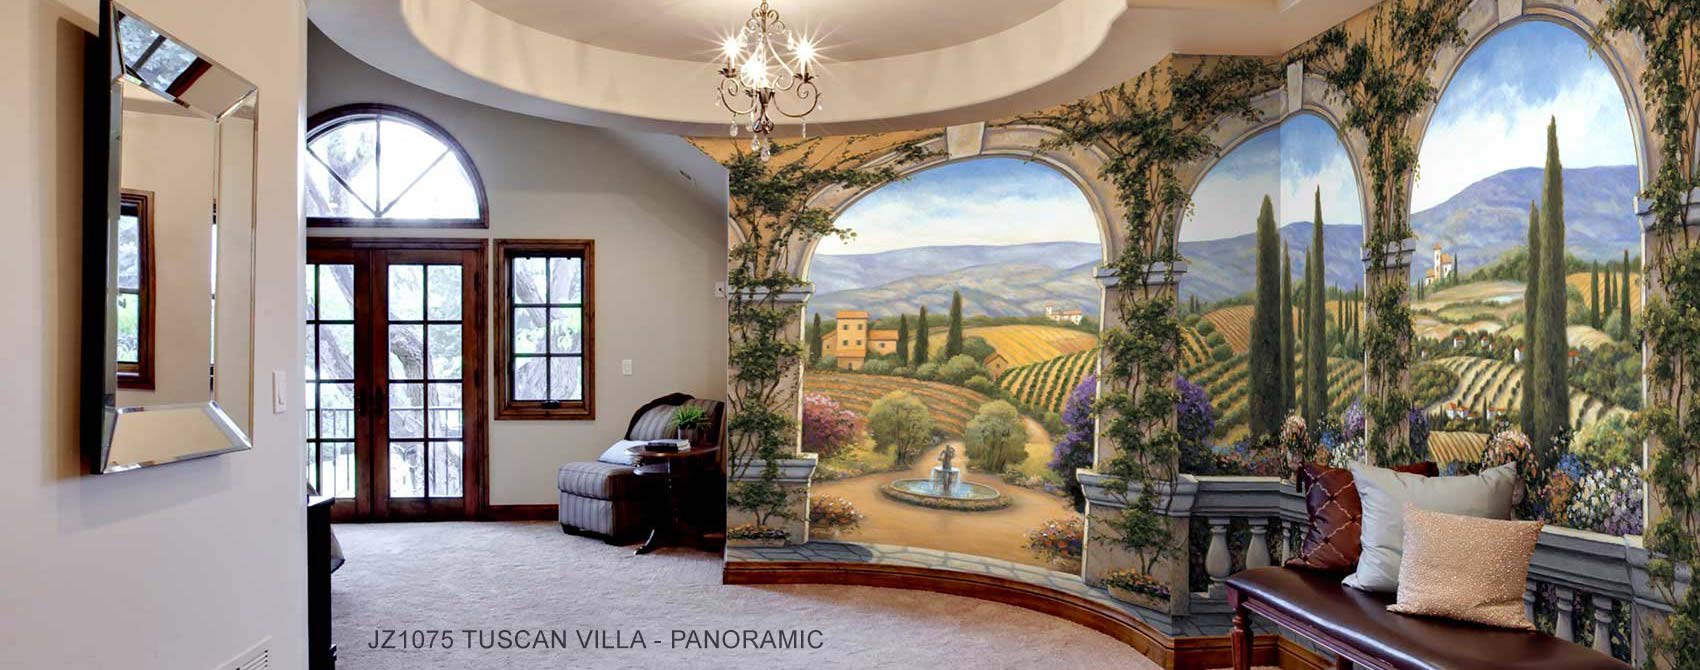 Tuscan Villa mural in senior living